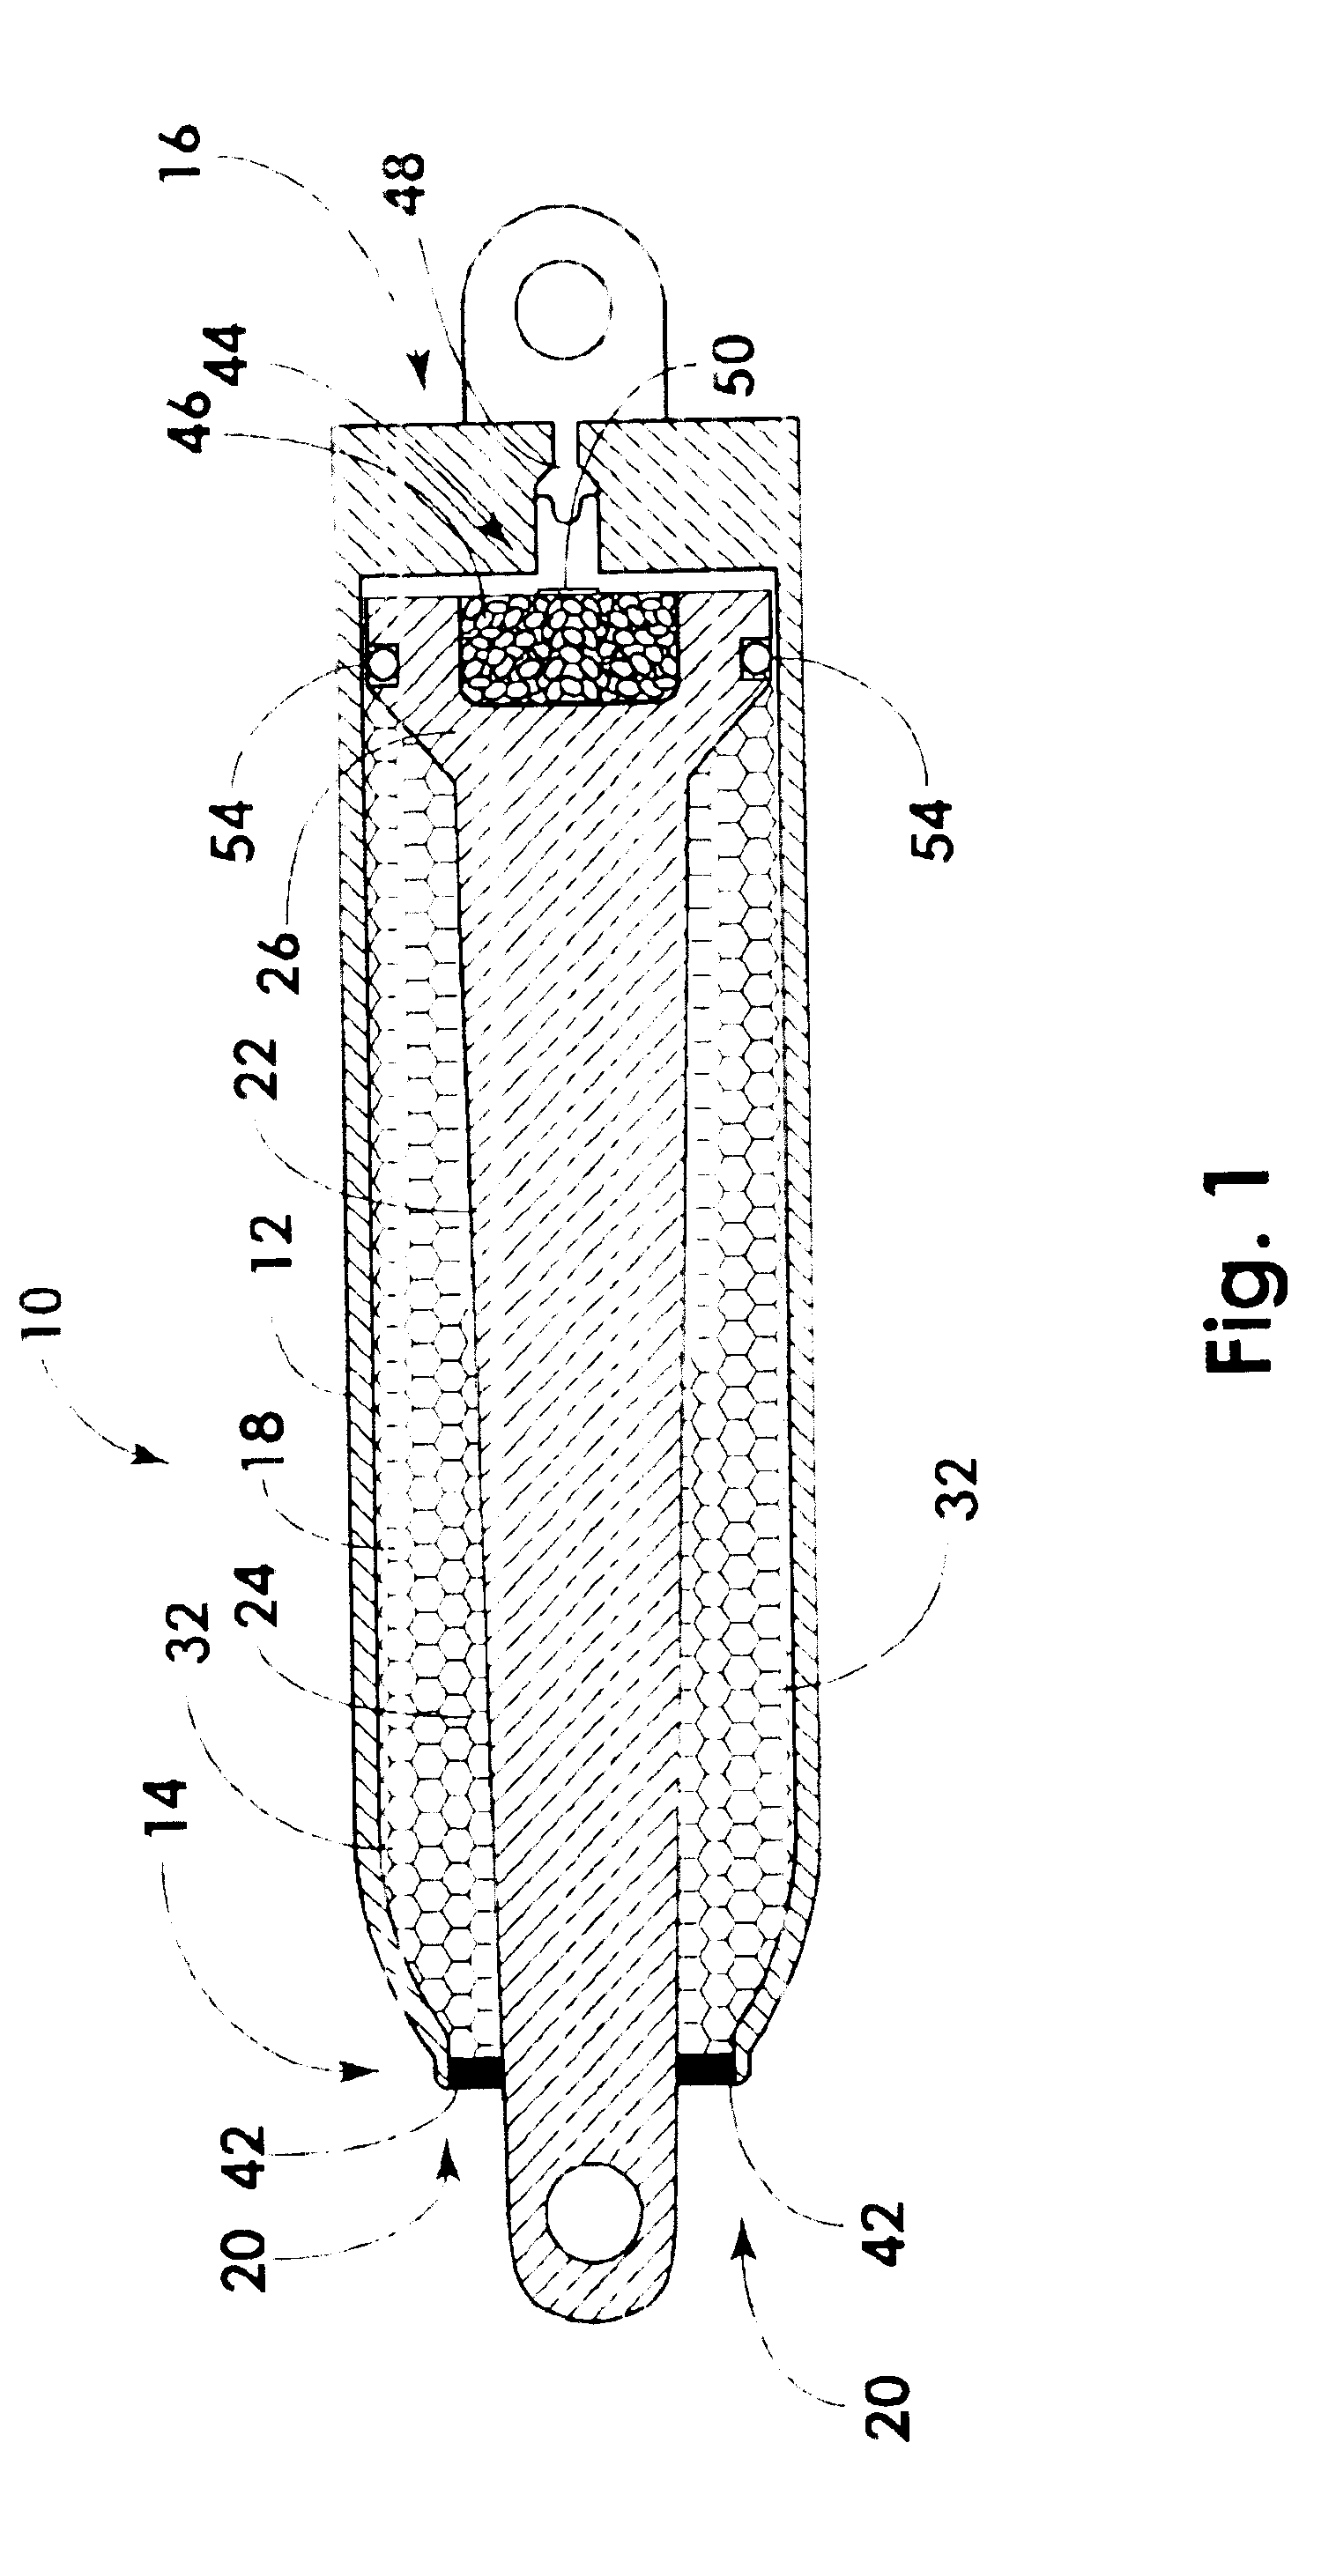 Linear actuator with an internal dampening mechanism